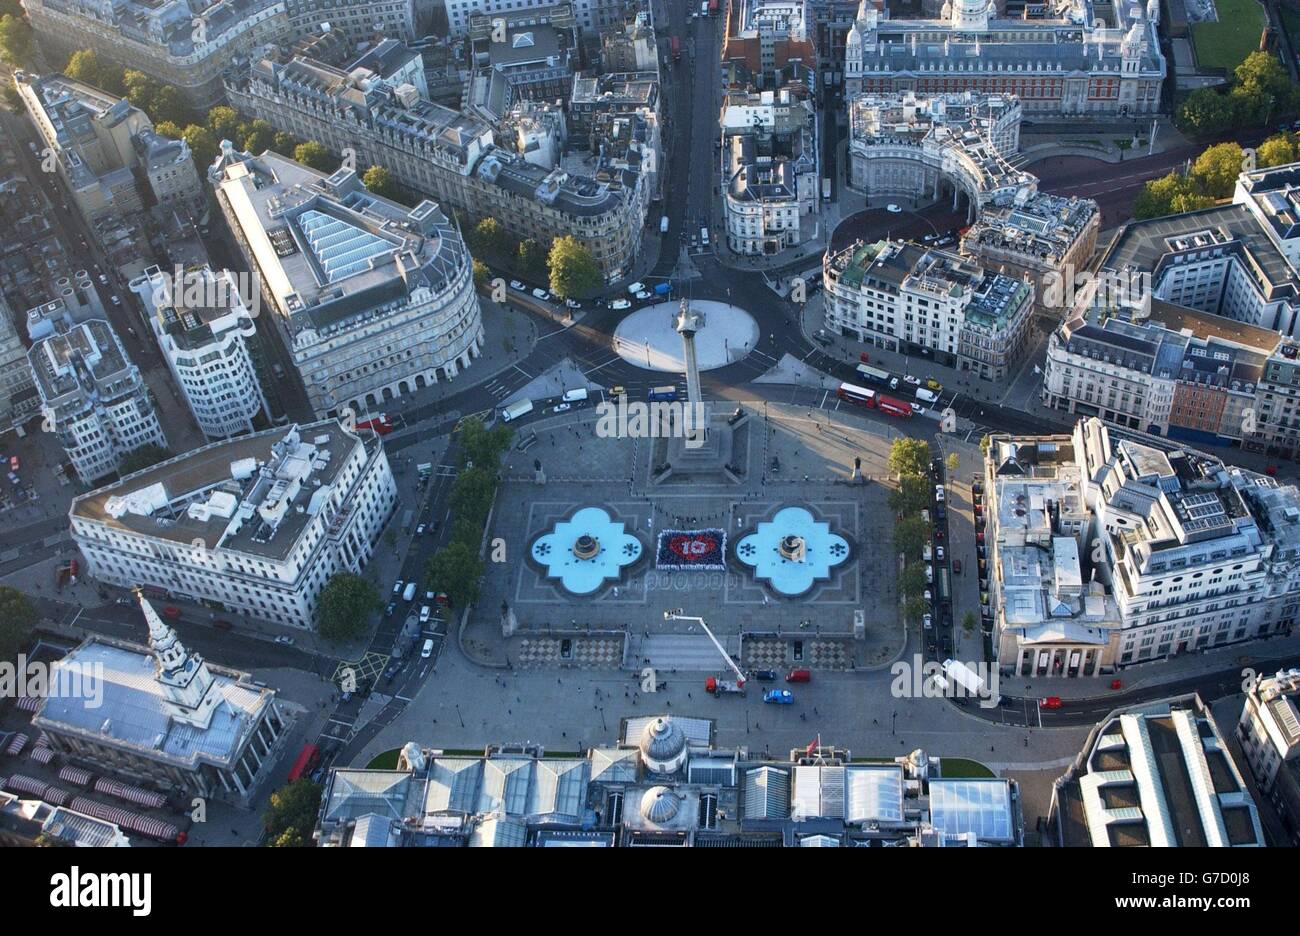 Trafalgar Square. Aerial view of London showing Trafalgar Square. Stock Photo